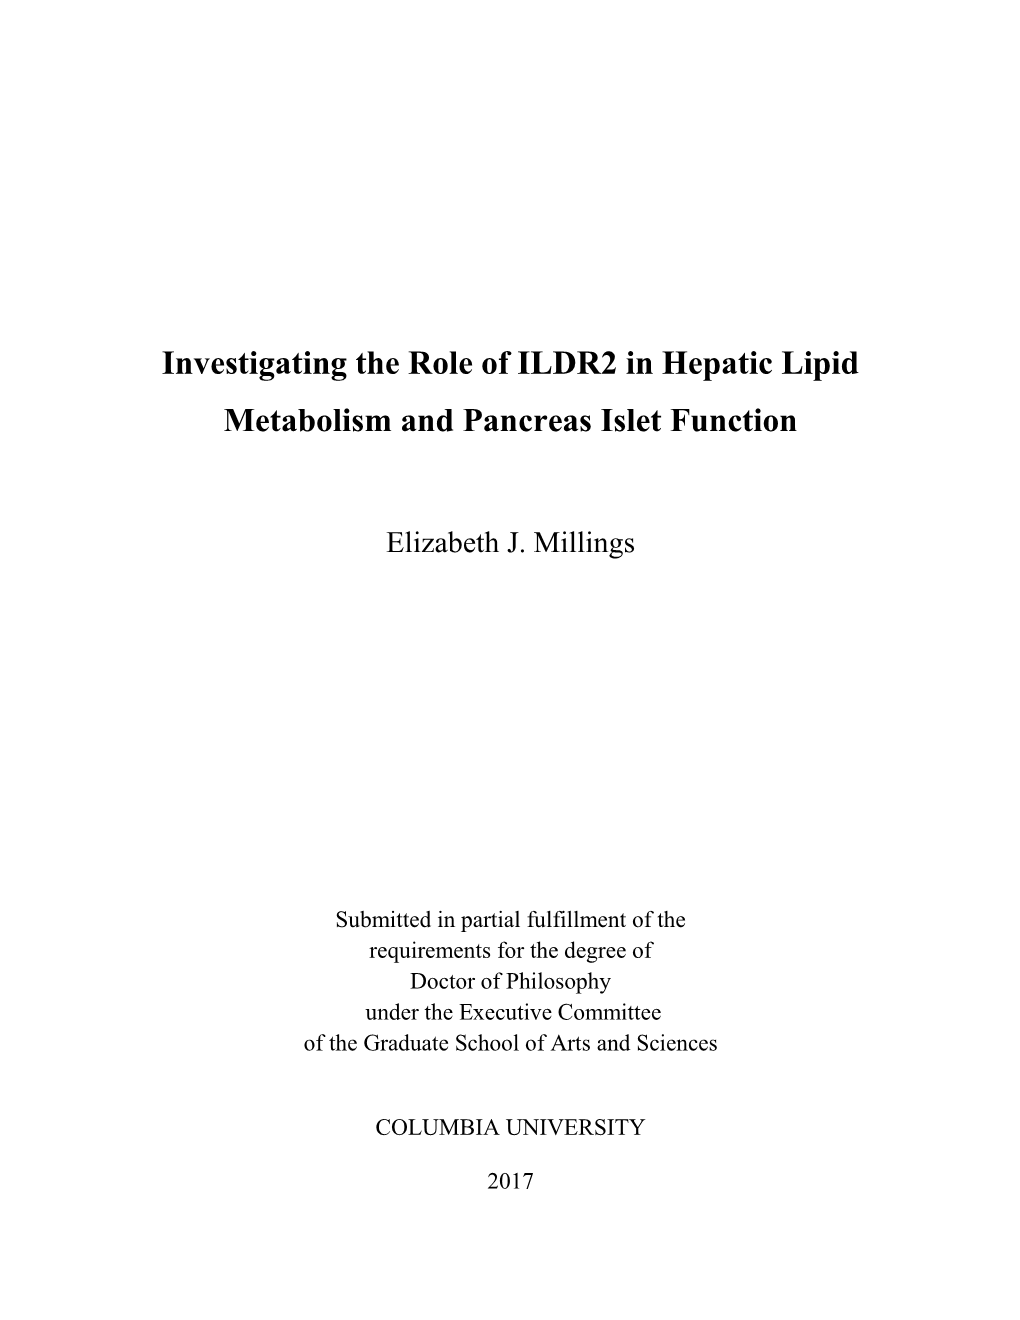 ILDR2 in Hepatic Lipid Metabolism and Pancreas Islet Function